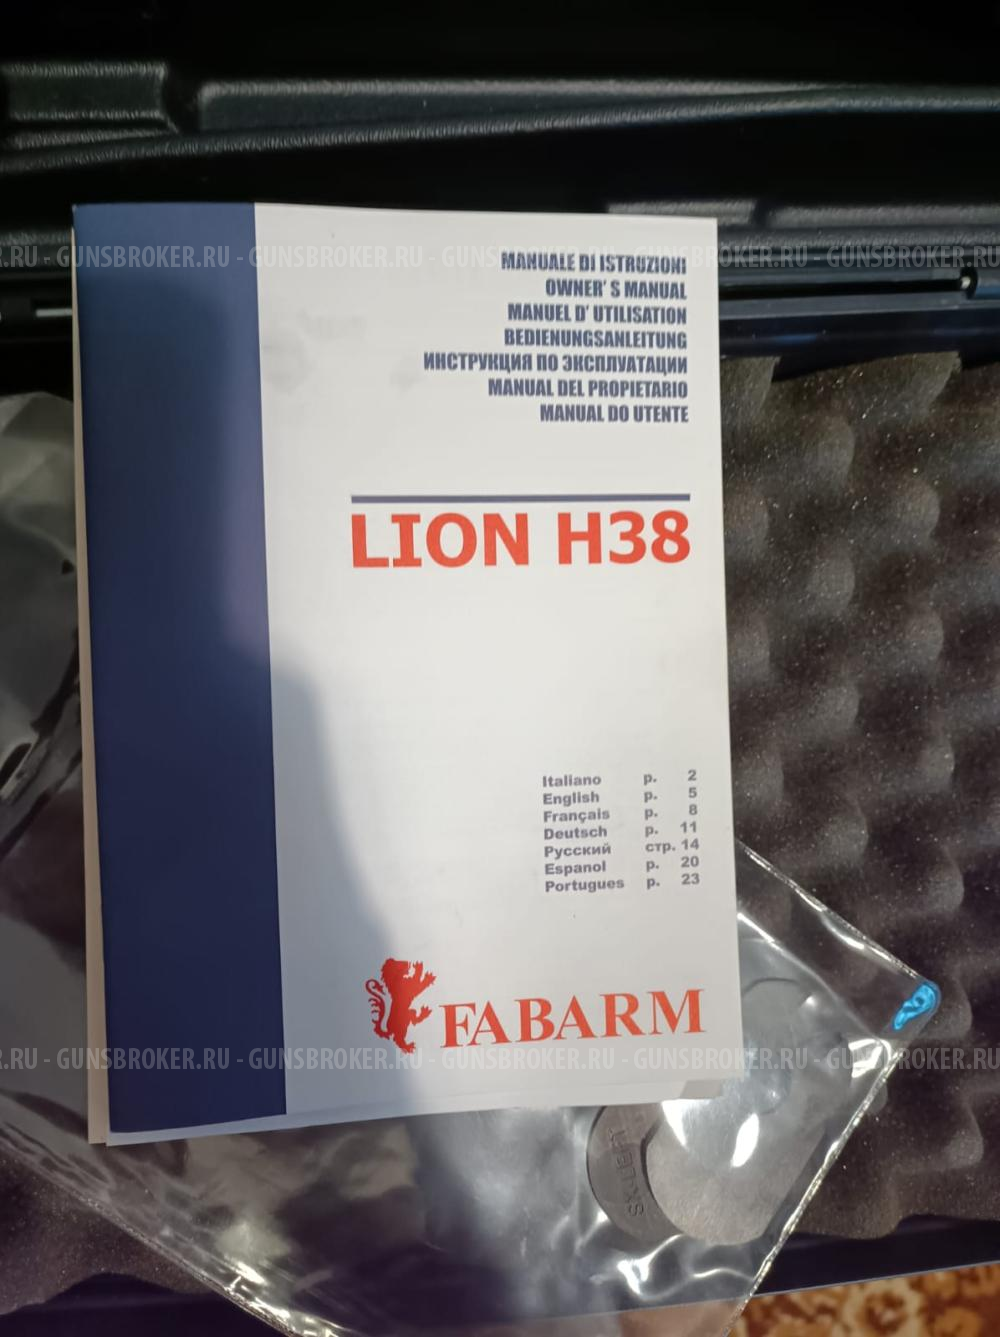 Ружье FABARM LION H38